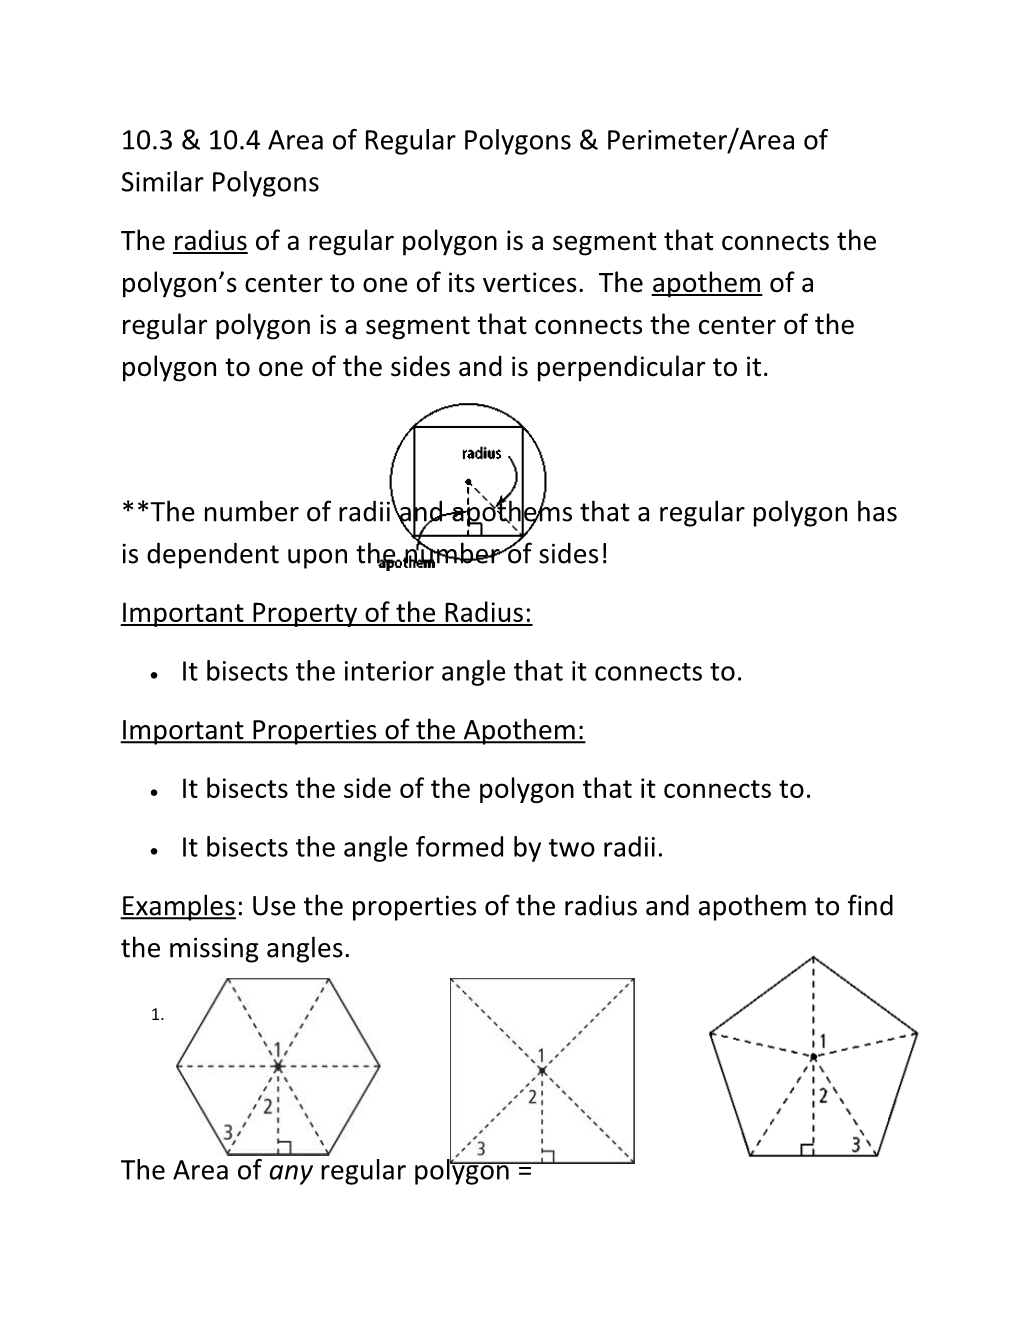 10.3 & 10.4 Area of Regular Polygons & Perimeter/Area of Similar Polygons